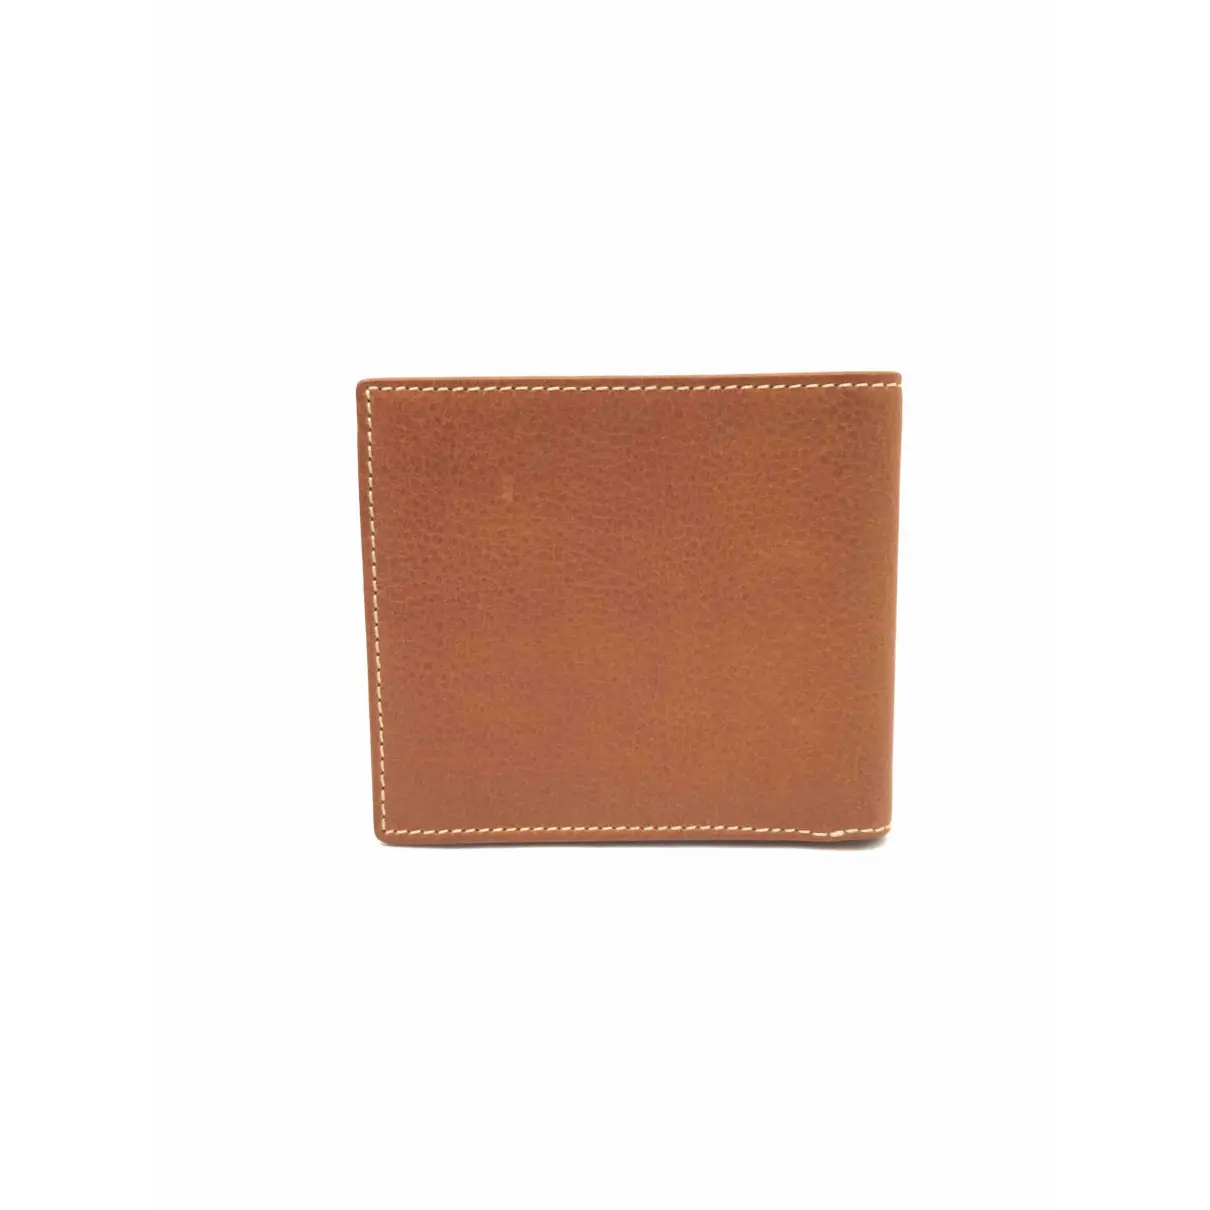 Buy Carolina Herrera Leather small bag online